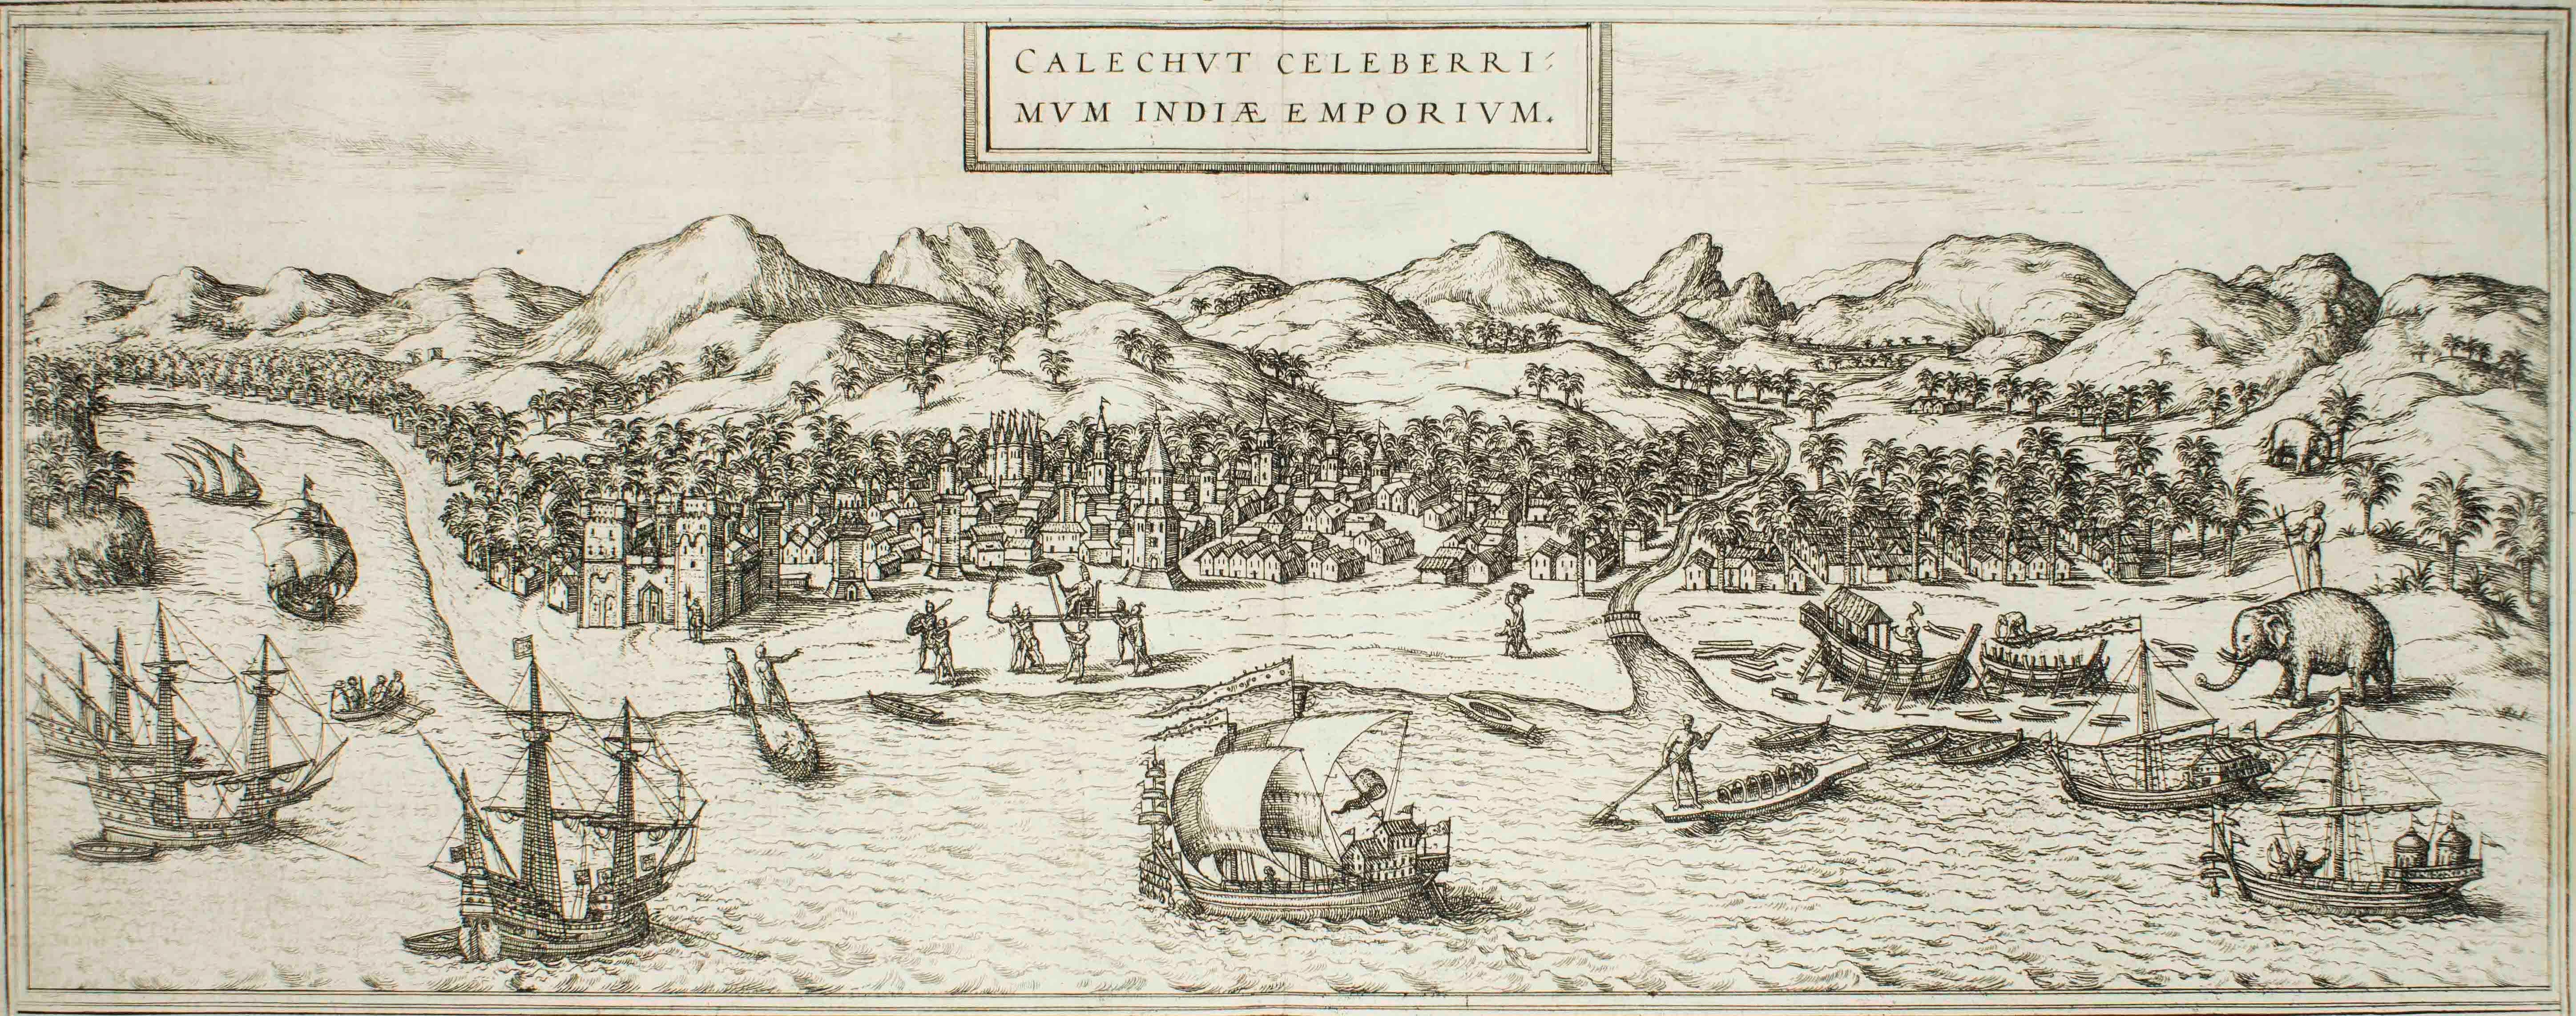 Frans Hogenberg Figurative Print - Kolkata (Calecut), Map from "Civitates Orbis Terrarum" - by F. Hogenberg - 1575